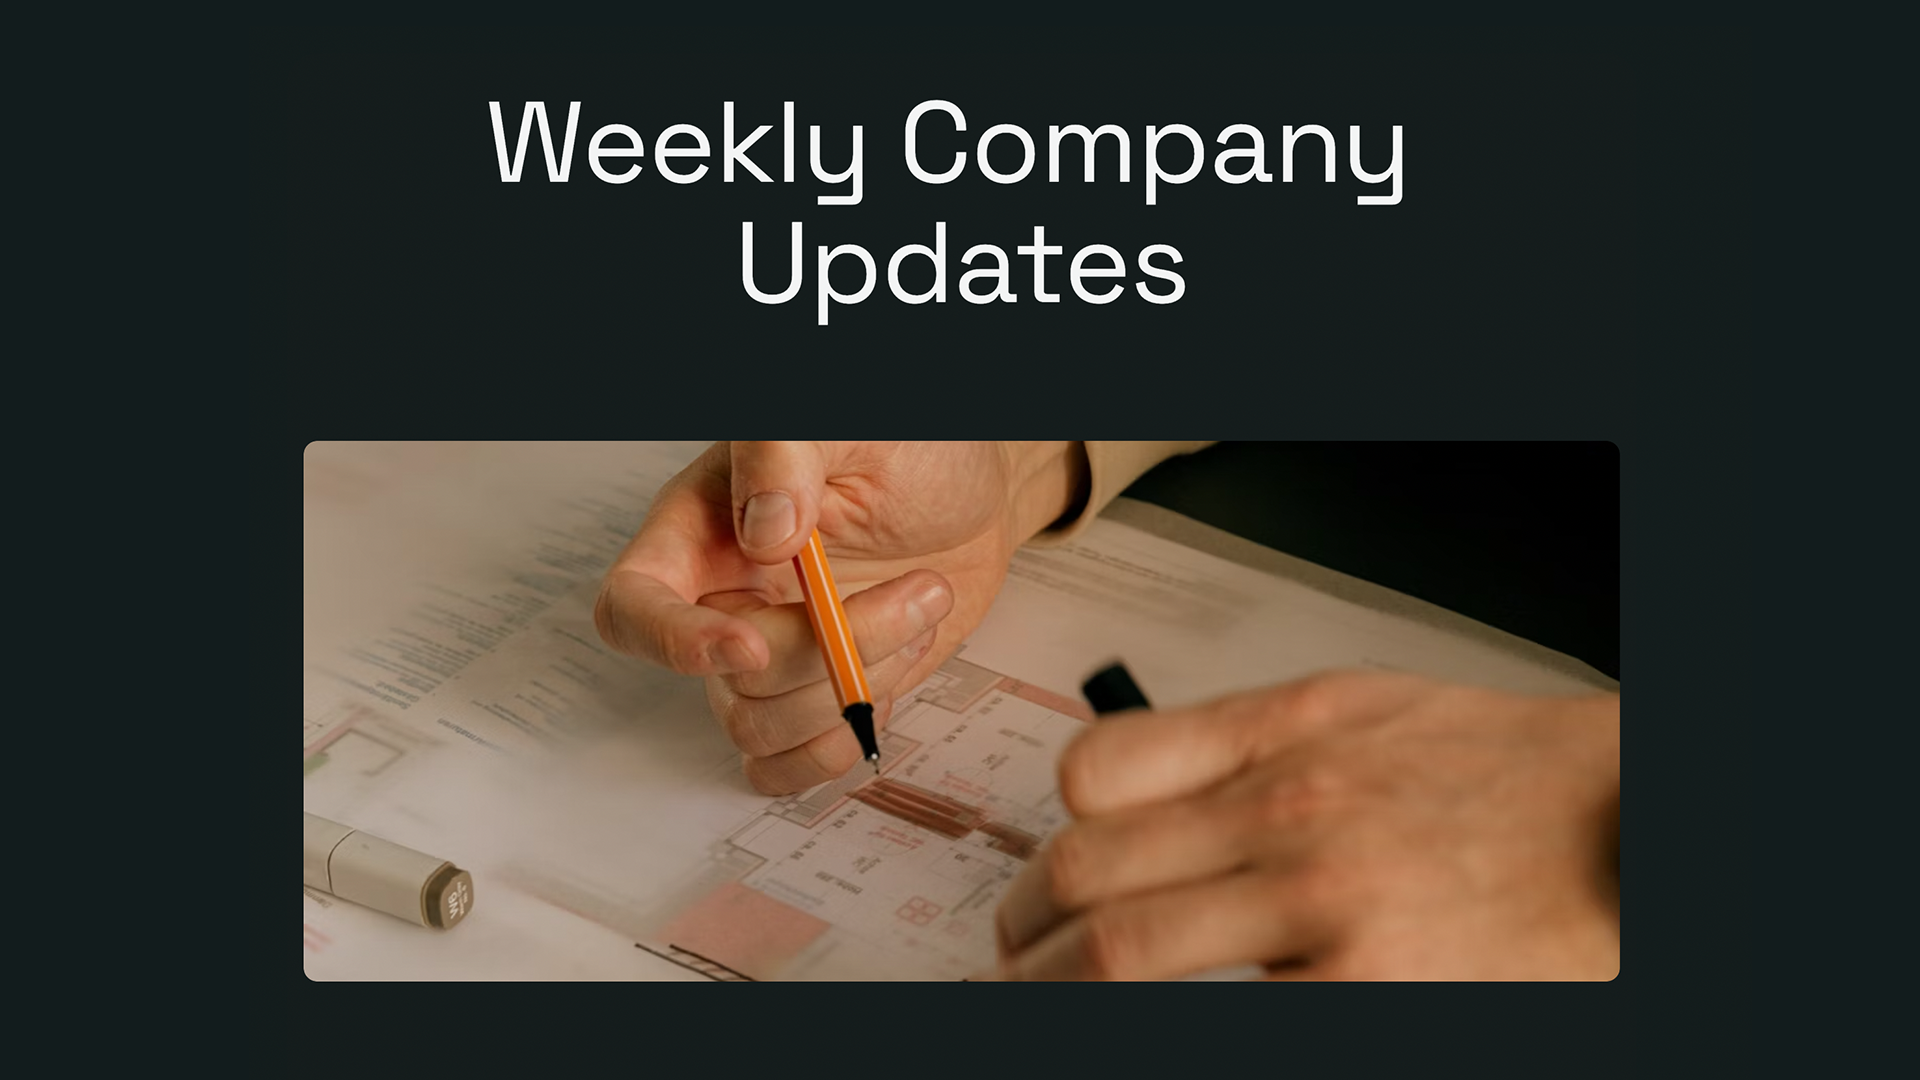 Weekly Company Update Template - Landing